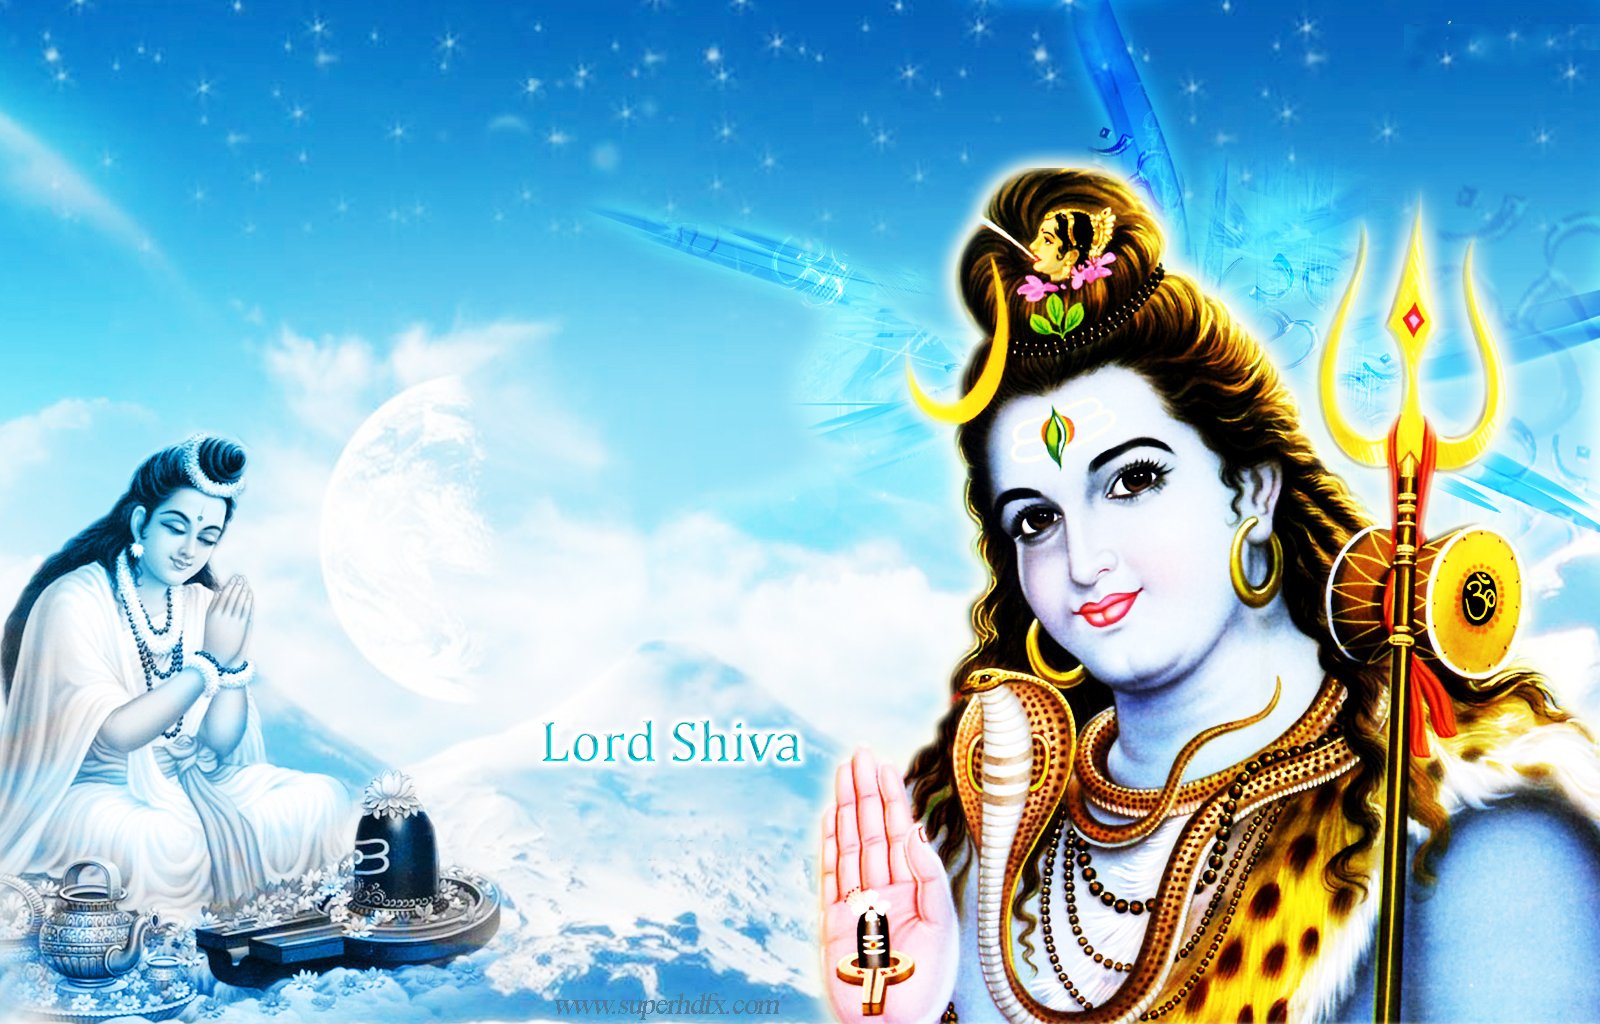 Lord Shiva Lingam Wallpaper Free Download